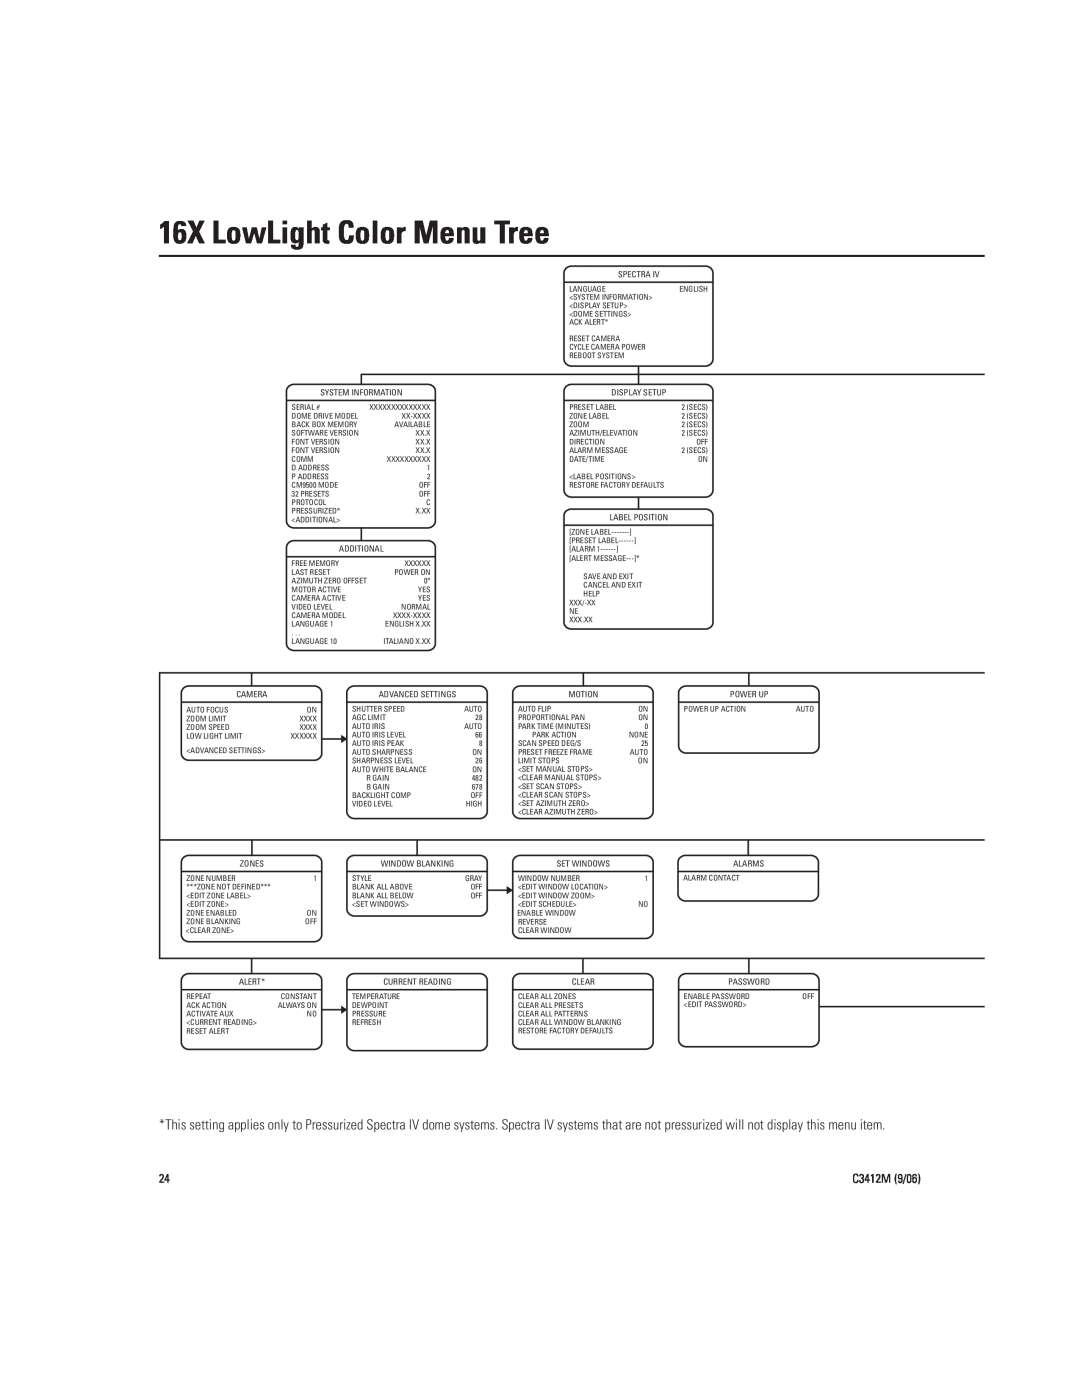 Pelco IV SE manual 16X LowLight Color Menu Tree, C3412M 9/06 